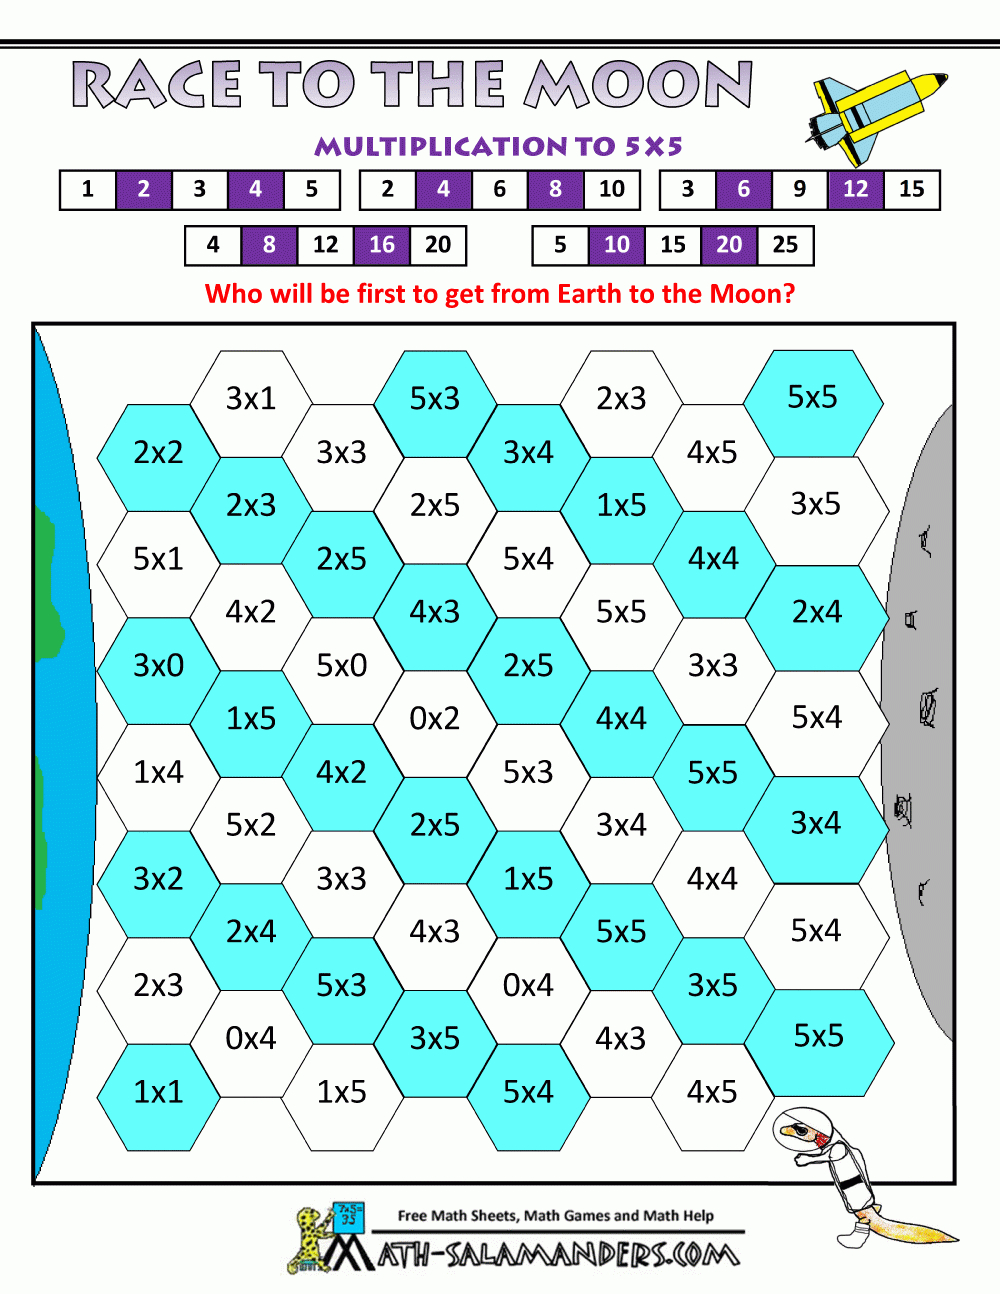  multiplication worksheets ks2 Printable Lexias Blog multiplication worksheets ks2 Printable 